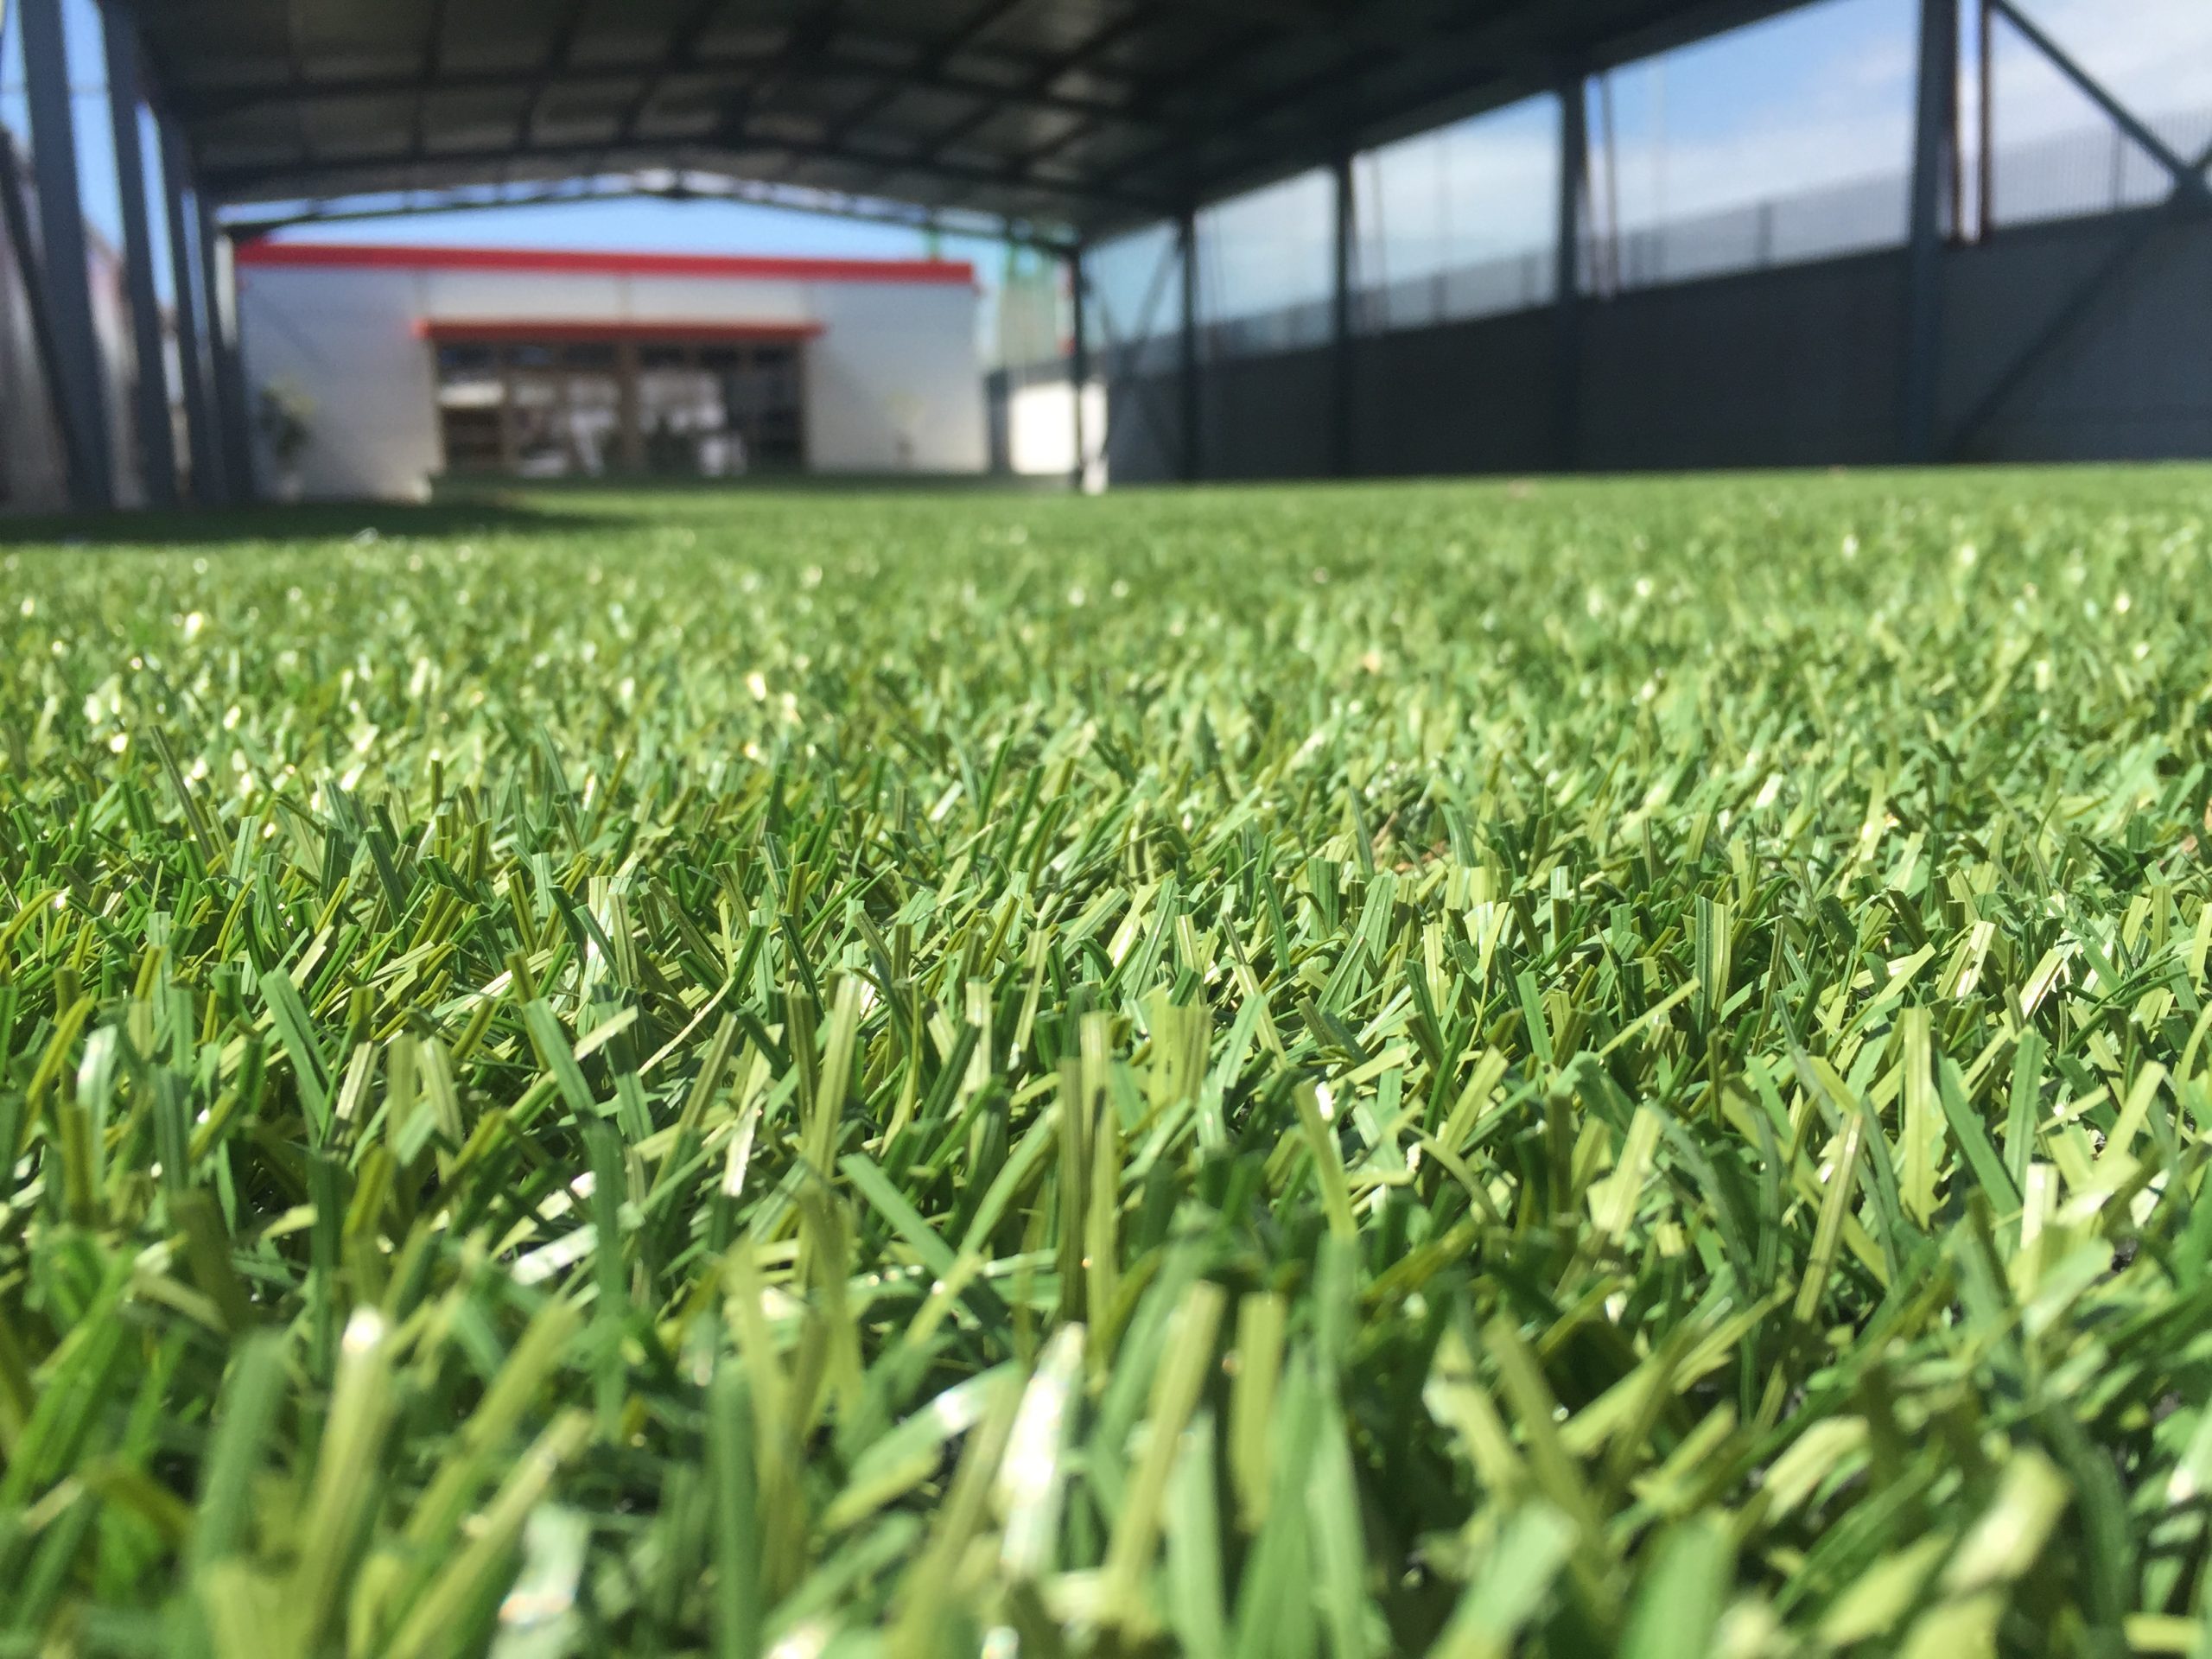 Greece, Indoor Artificial Grass Field